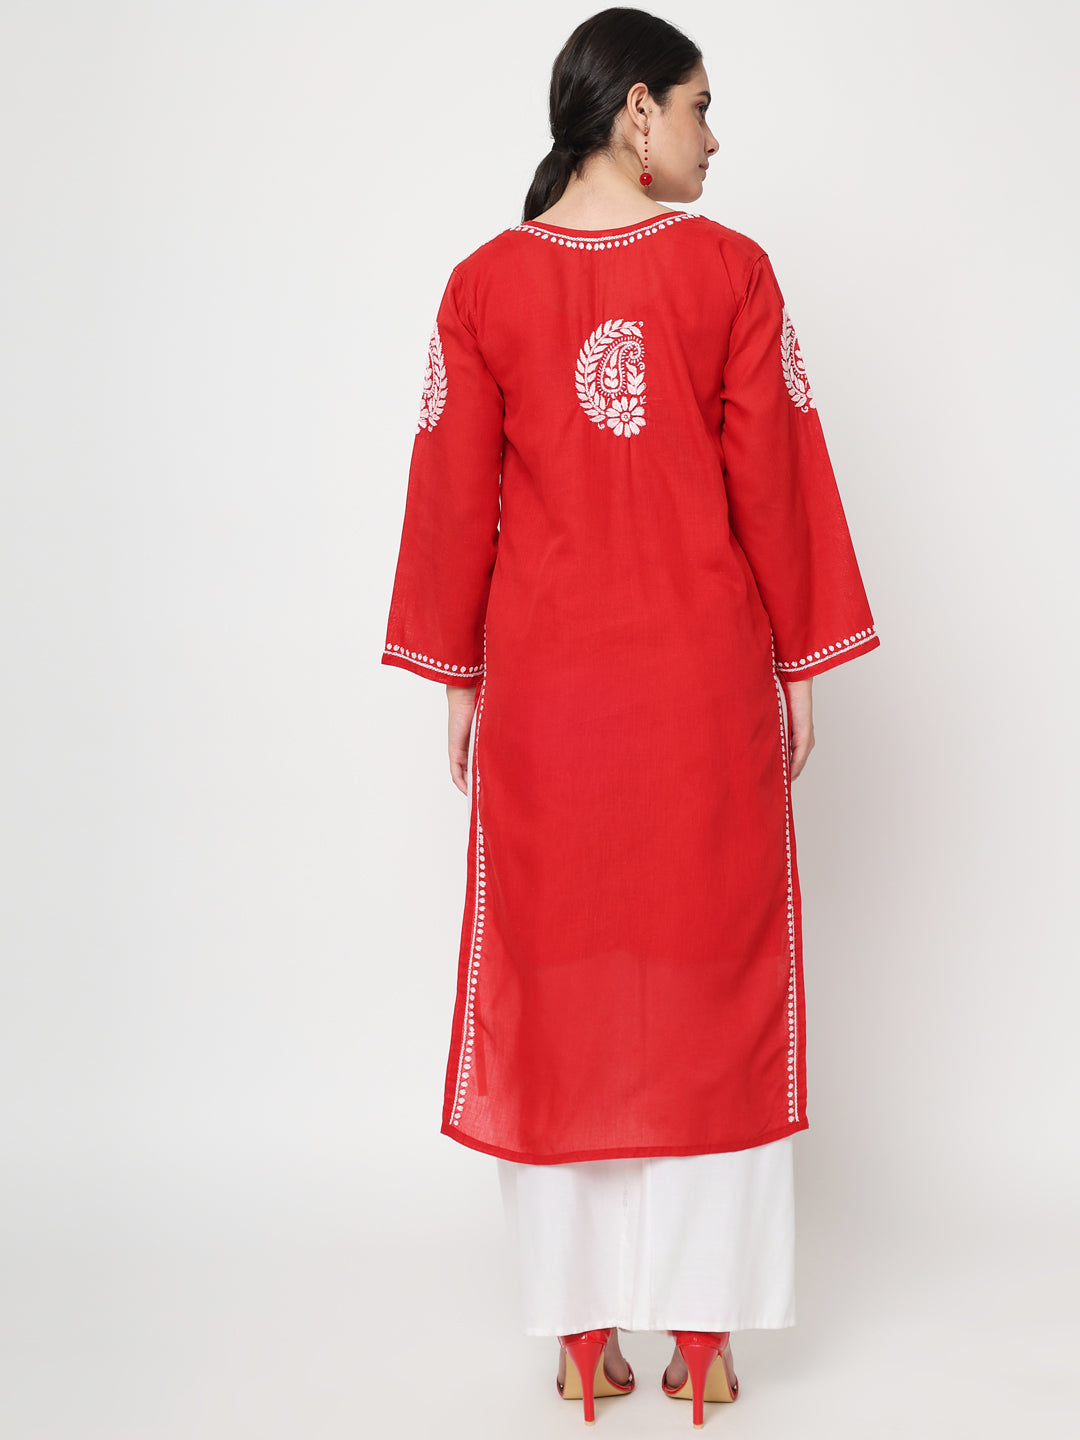 Hand Embroidered Red Chikankari Cotton Straight Kurta- AL3561